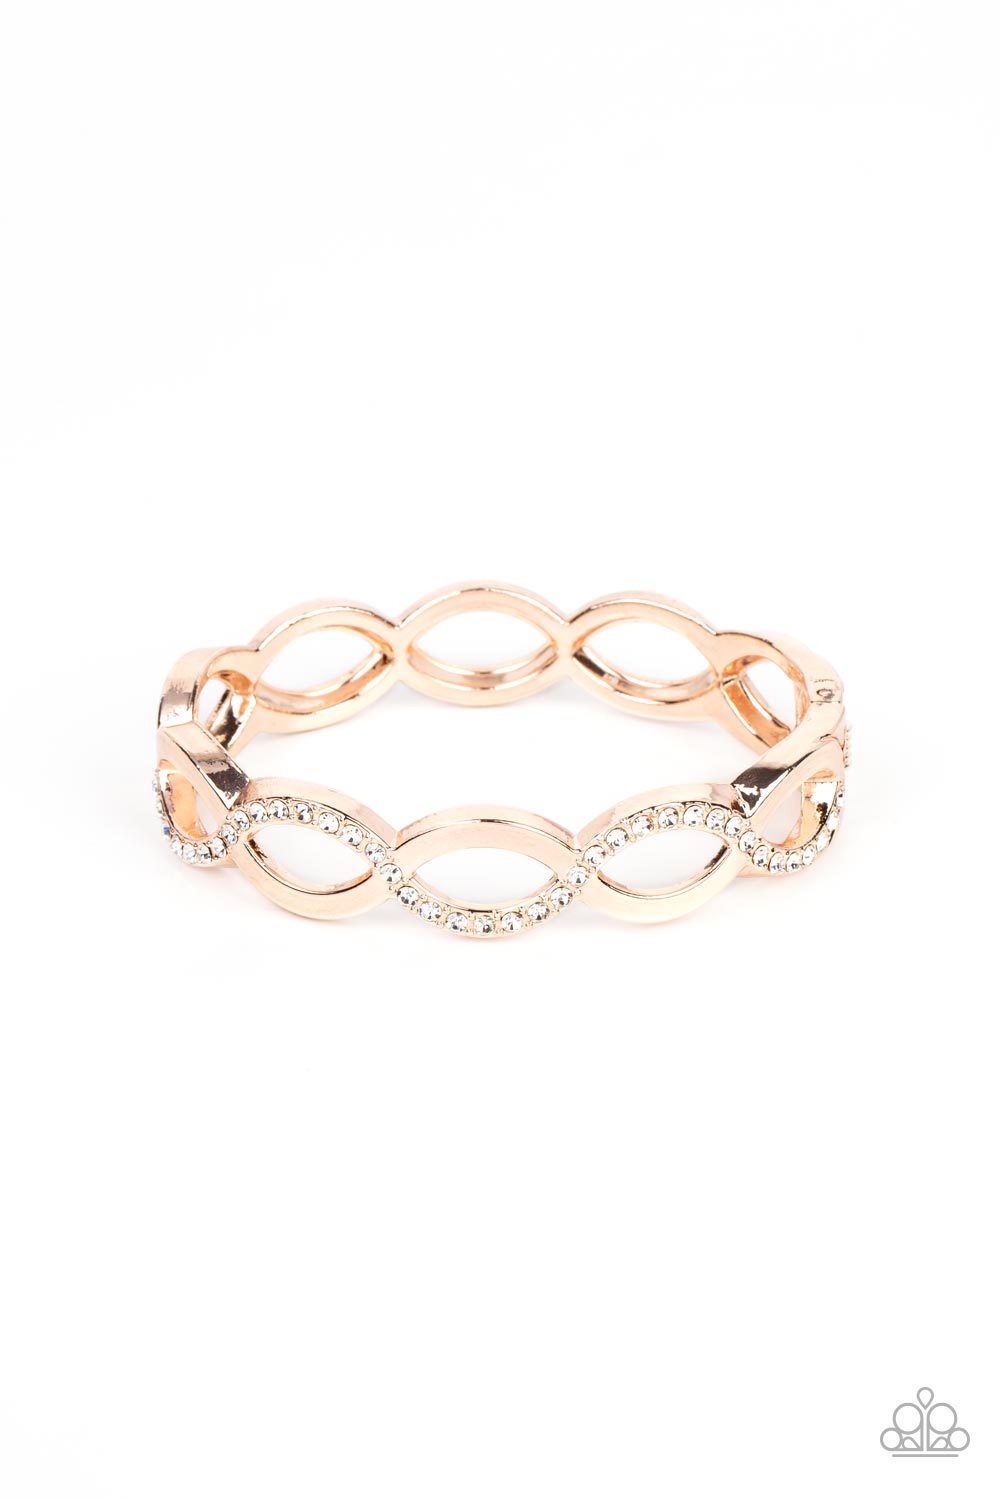 Paparazzi Bracelets - Tailored Twinkle - Rose Gold